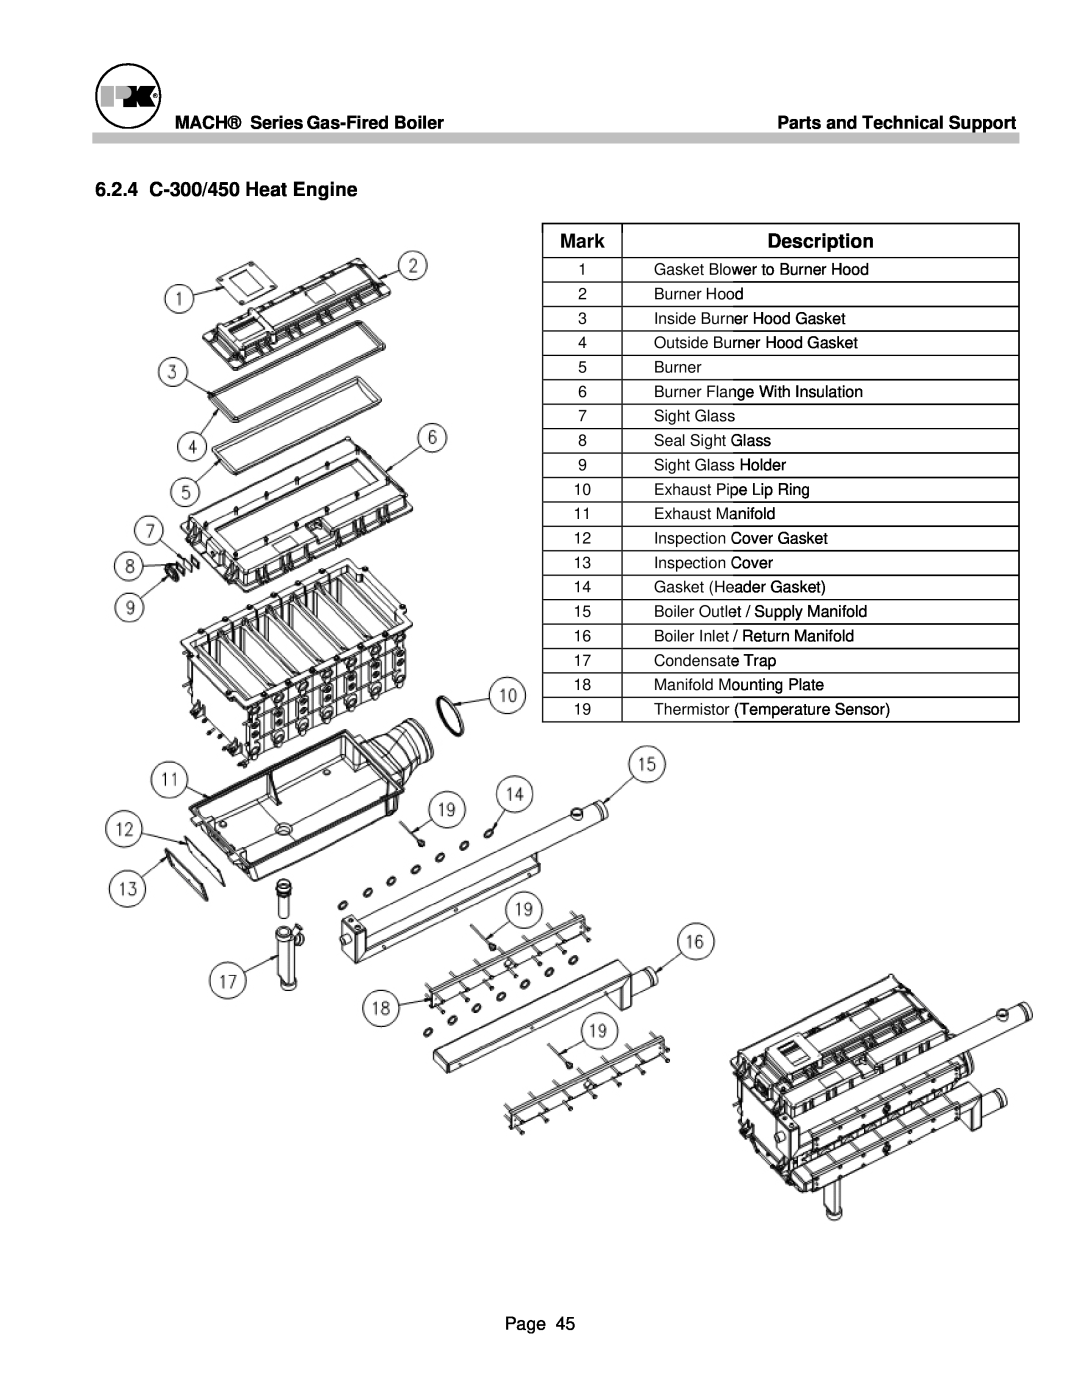 Patterson-Kelley MACH-05 manual 6.2.4 C-300/450Heat Engine Mark, Description 